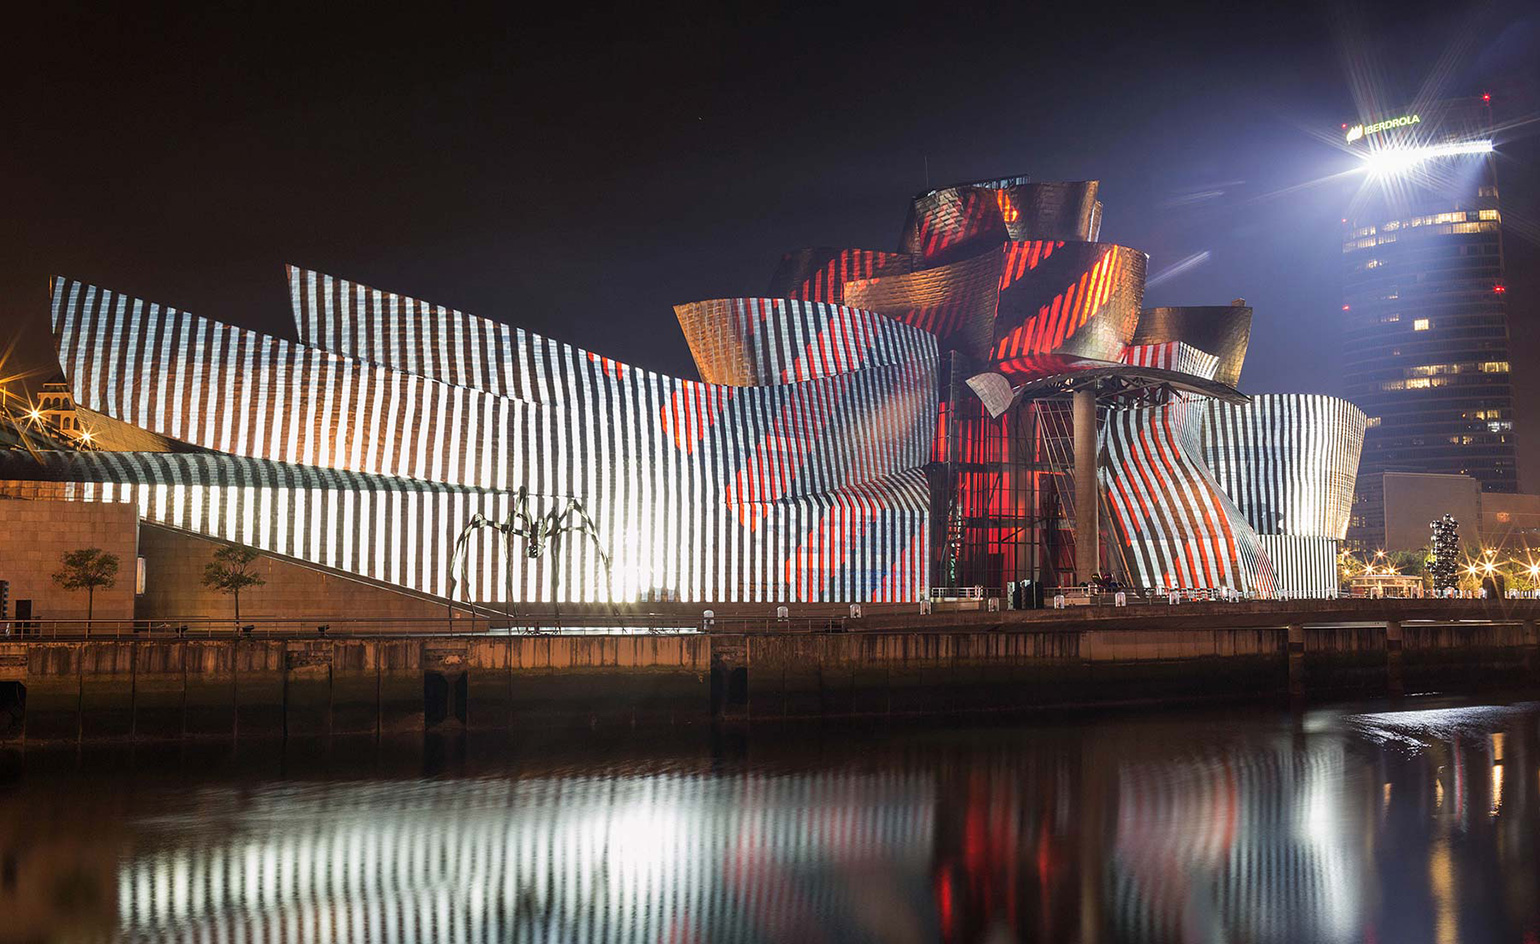 Guggenheim Bilbao turns 20 in spectacular style